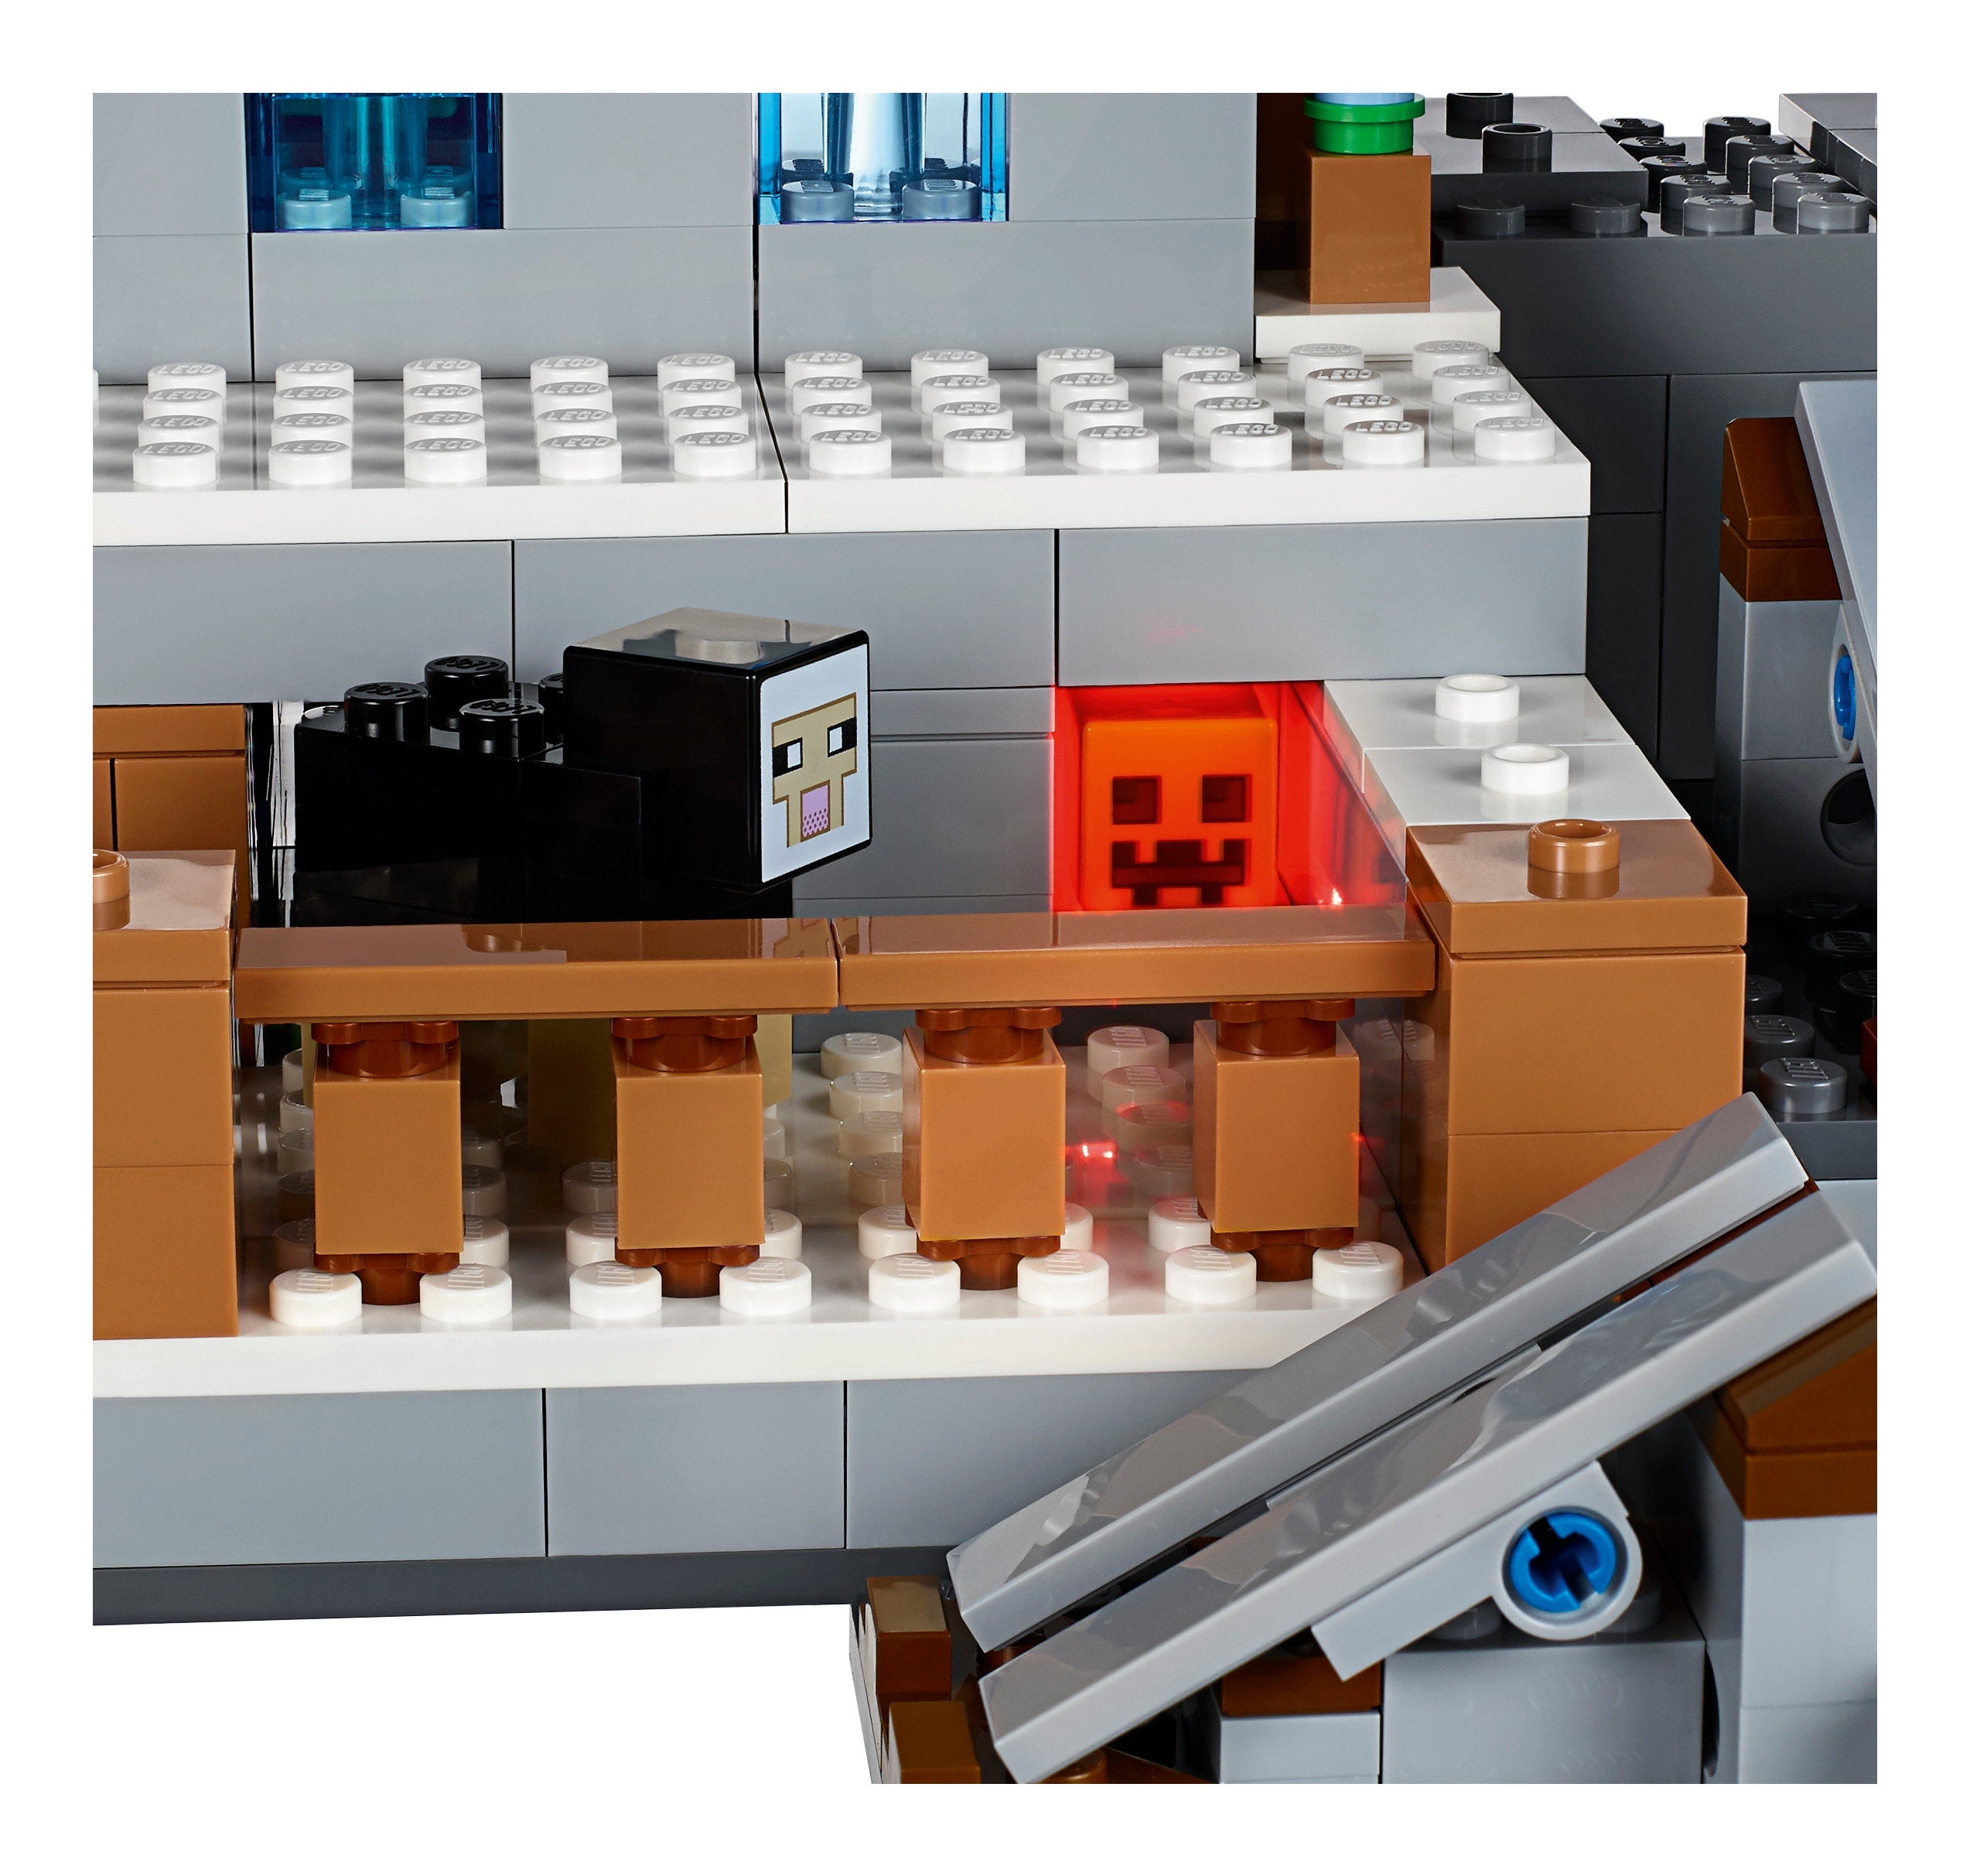 Details about    NEW 2688PCS Minecraft Organ Cave Assembled Building Block 21137 